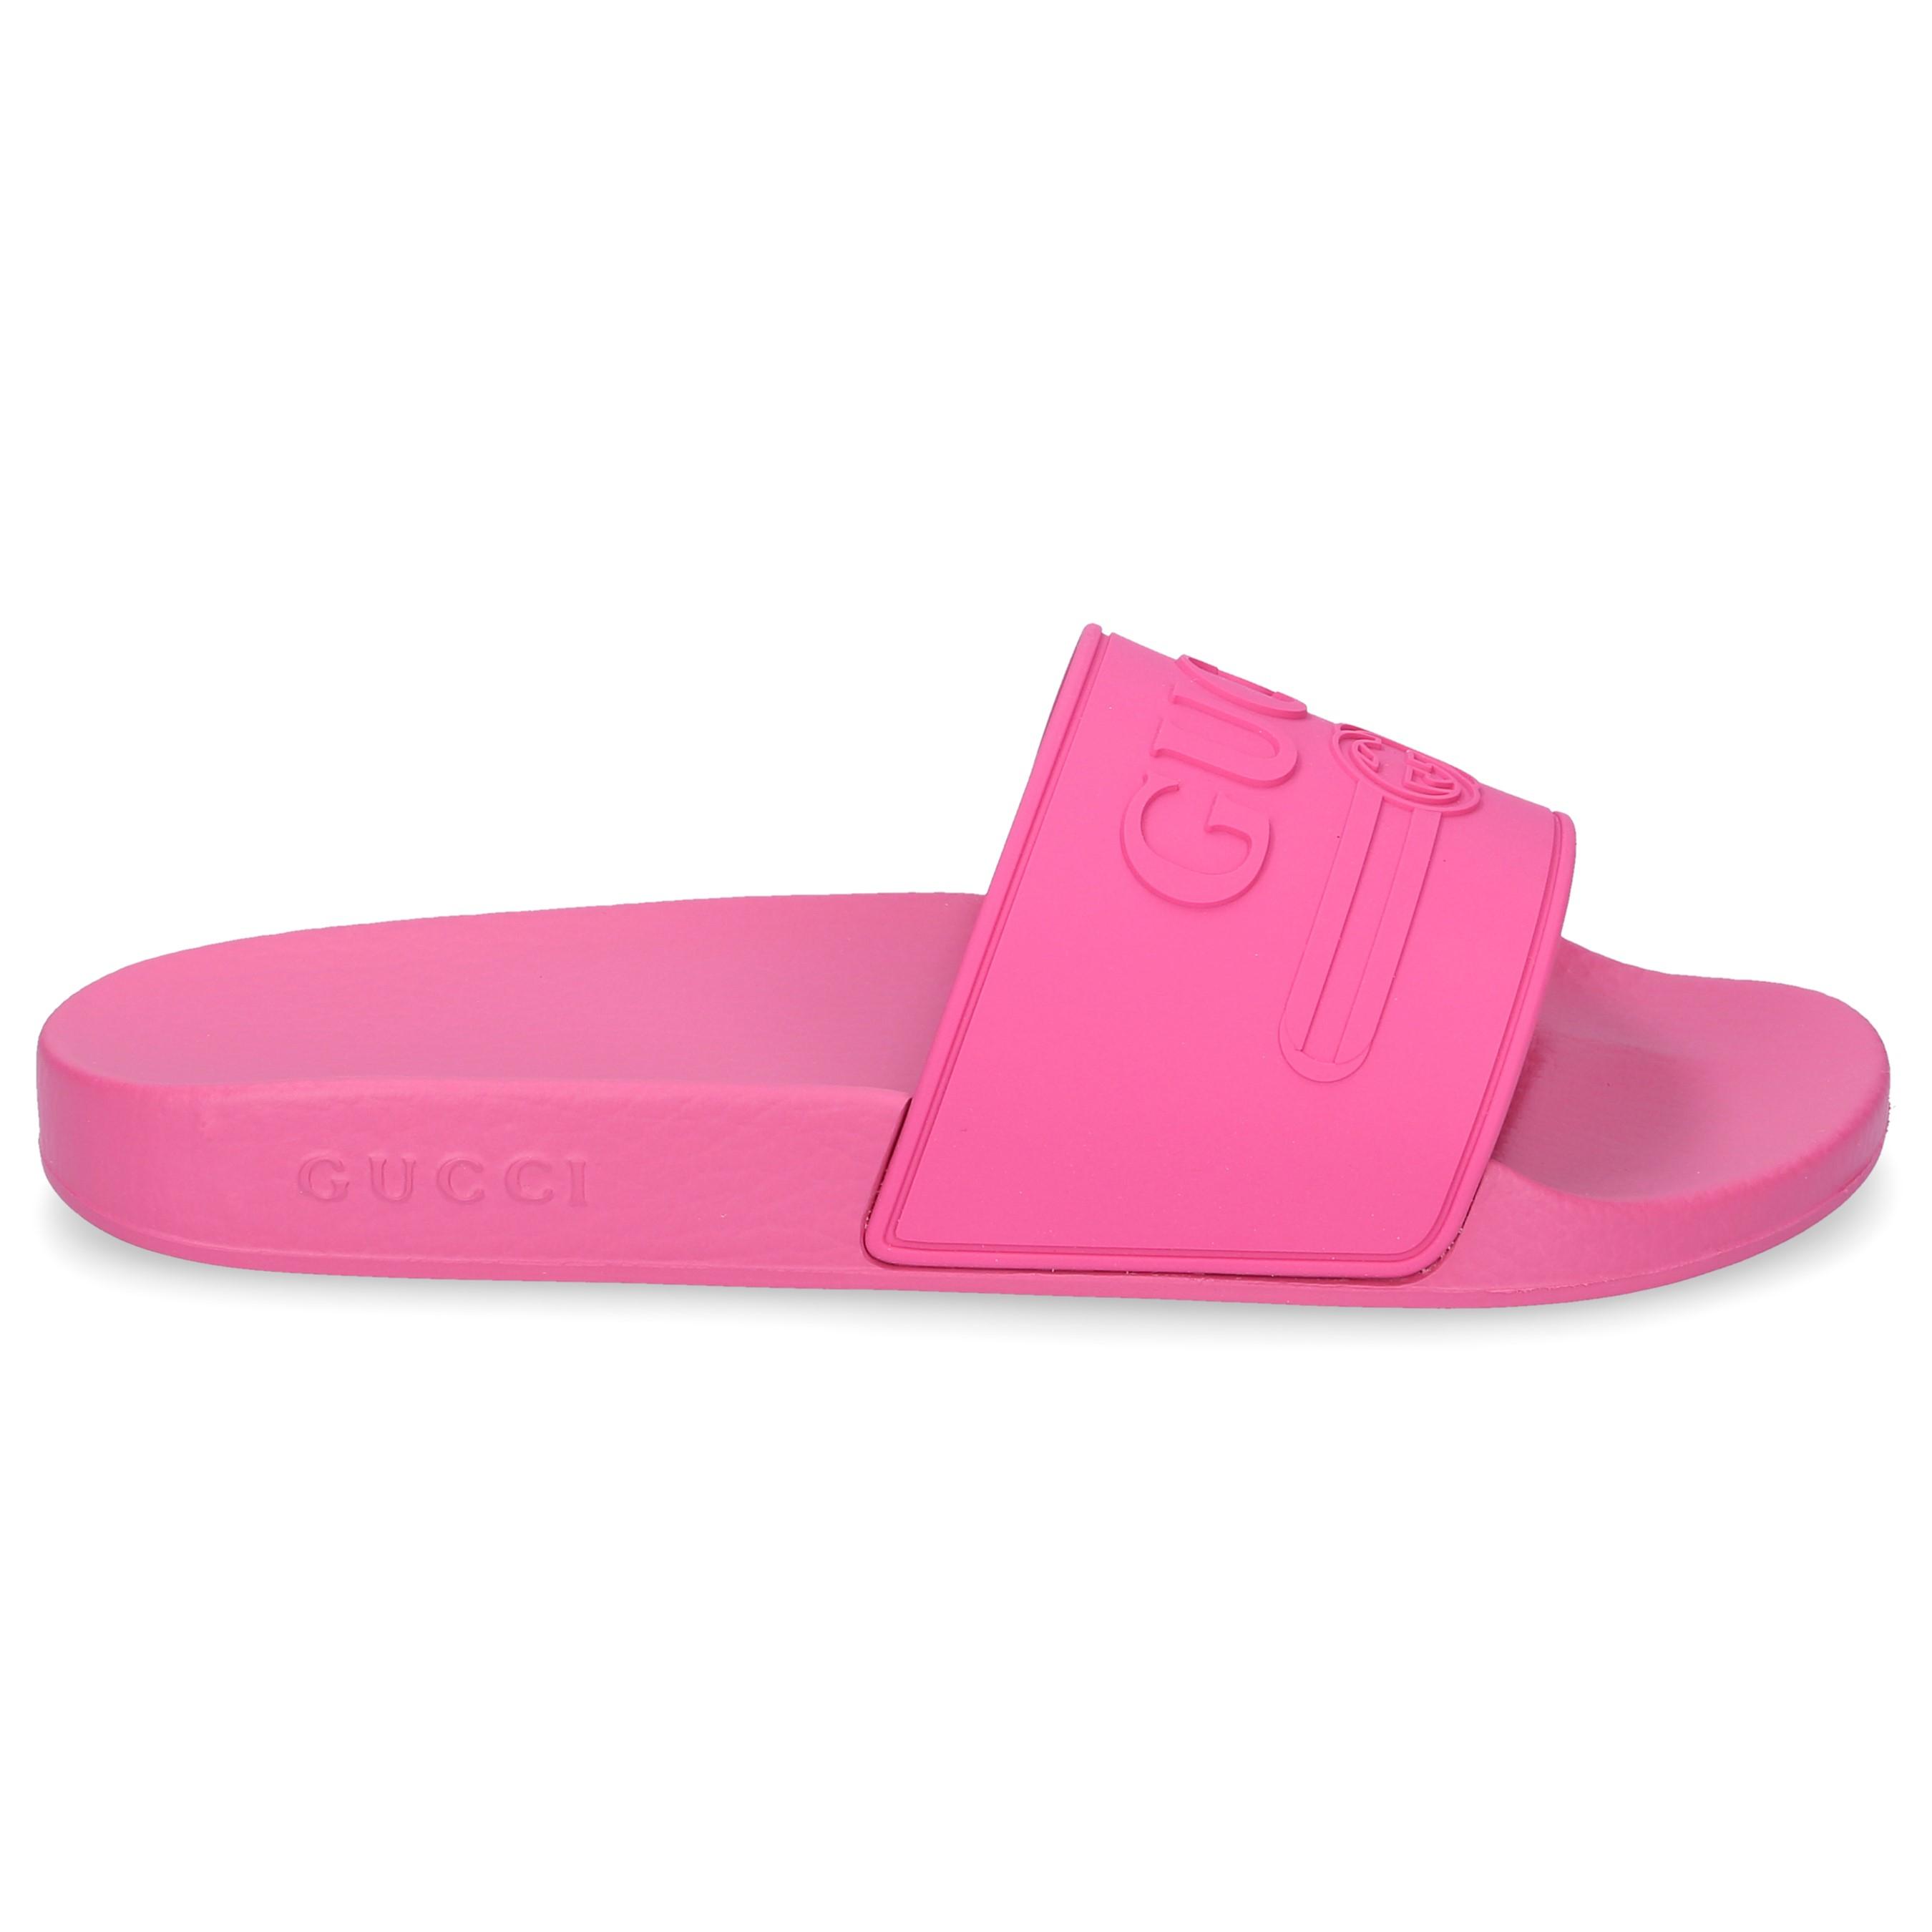 Gucci Beach Sandals Jcz00 Gum Logo Pink for Men - Lyst